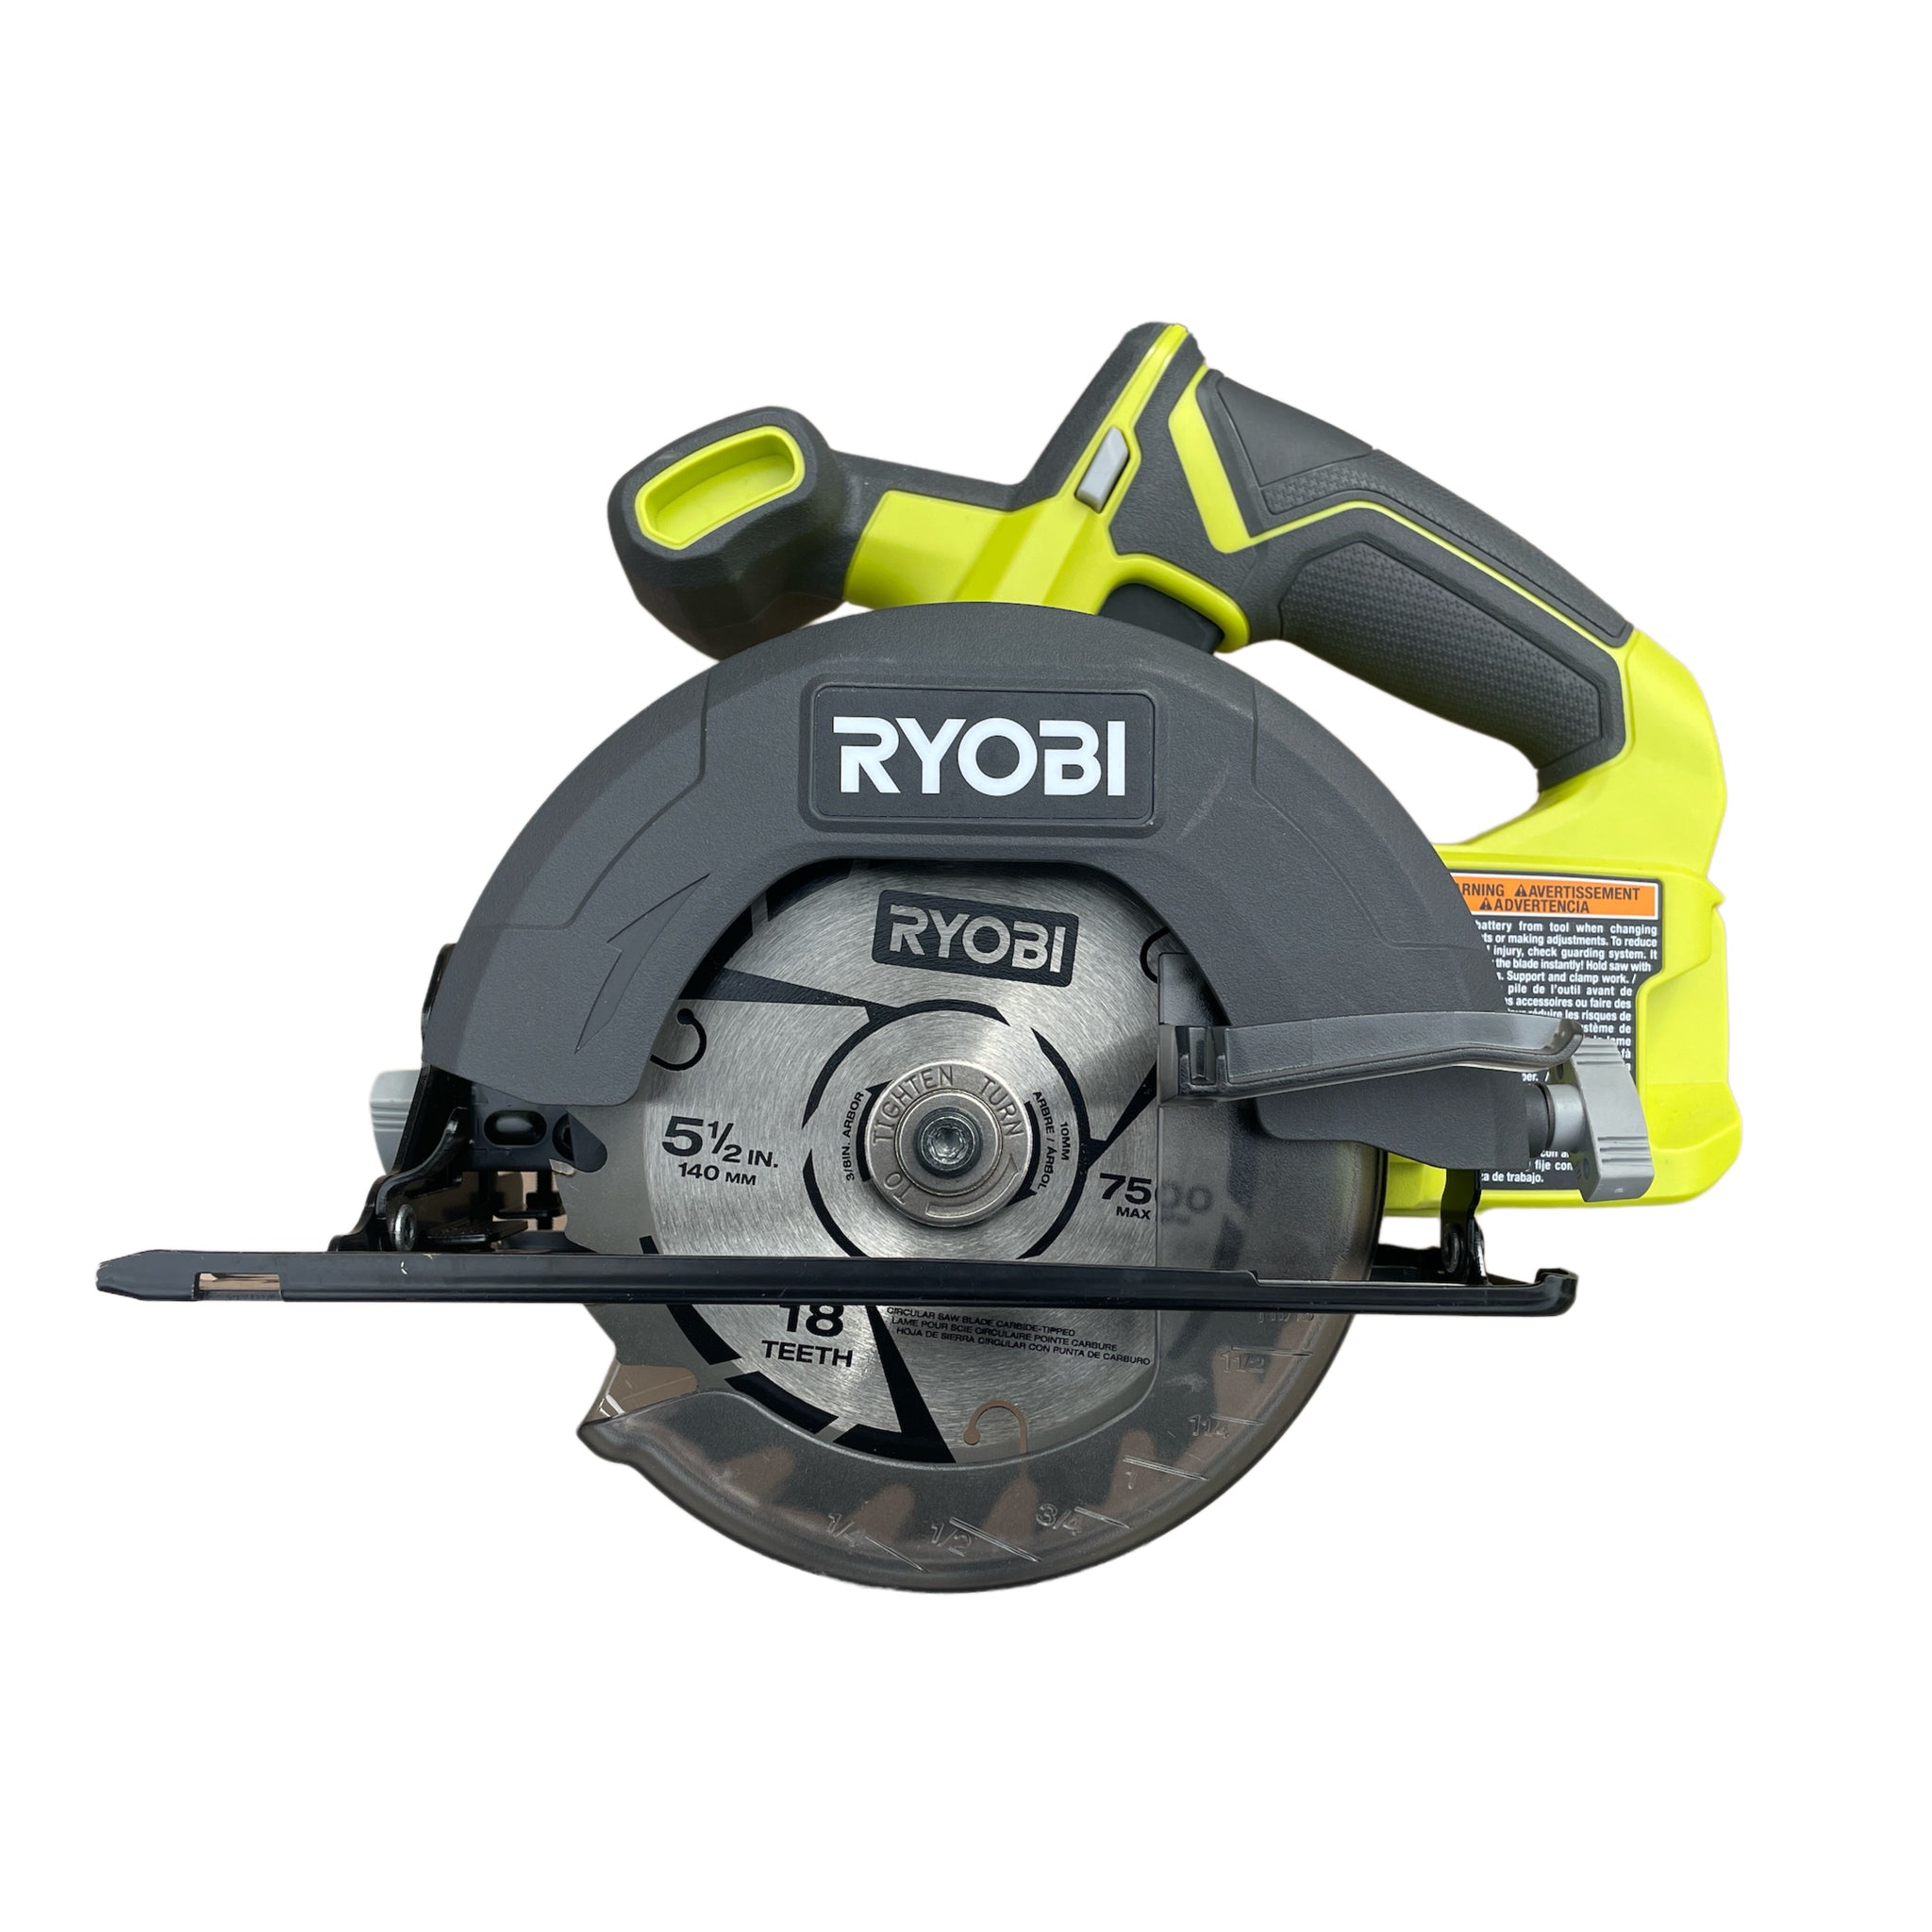 18V ONE+ 5-1/2 Circular Saw - RYOBI Tools